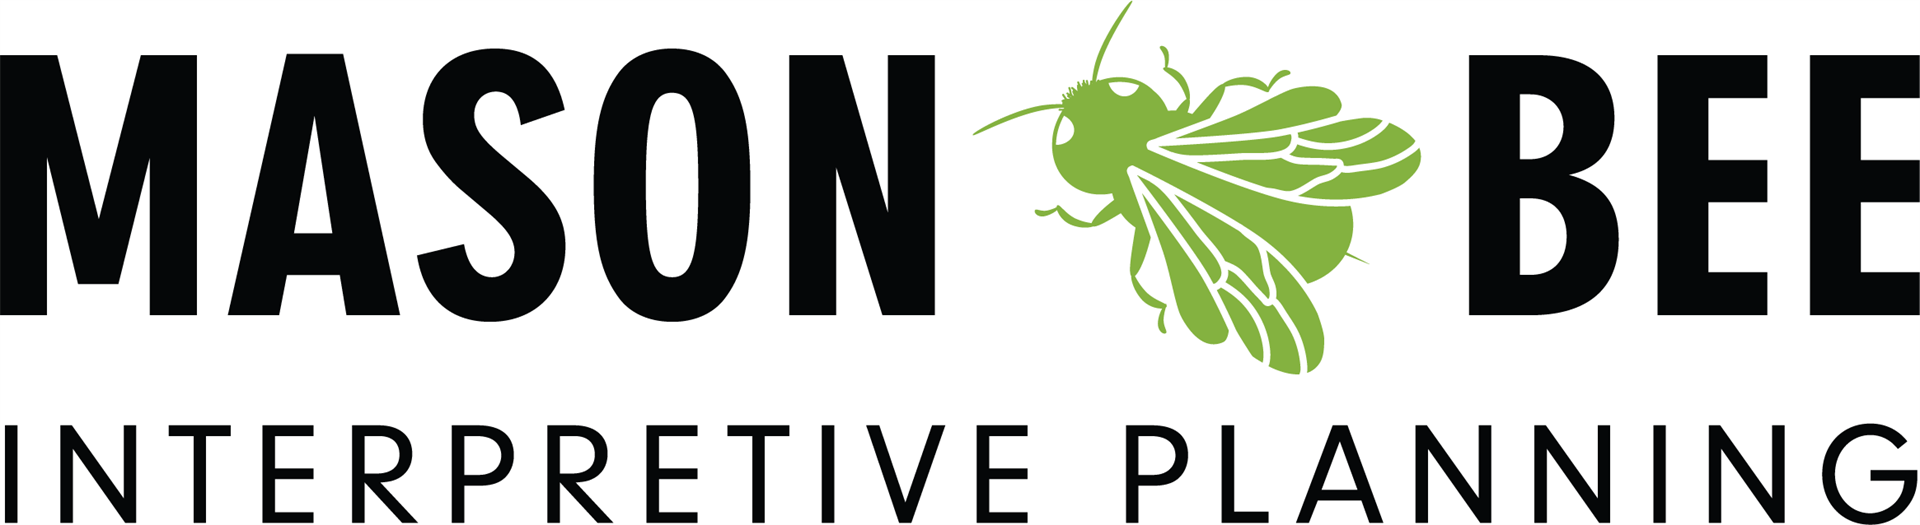 Mason Bee Interpretive Planning logo